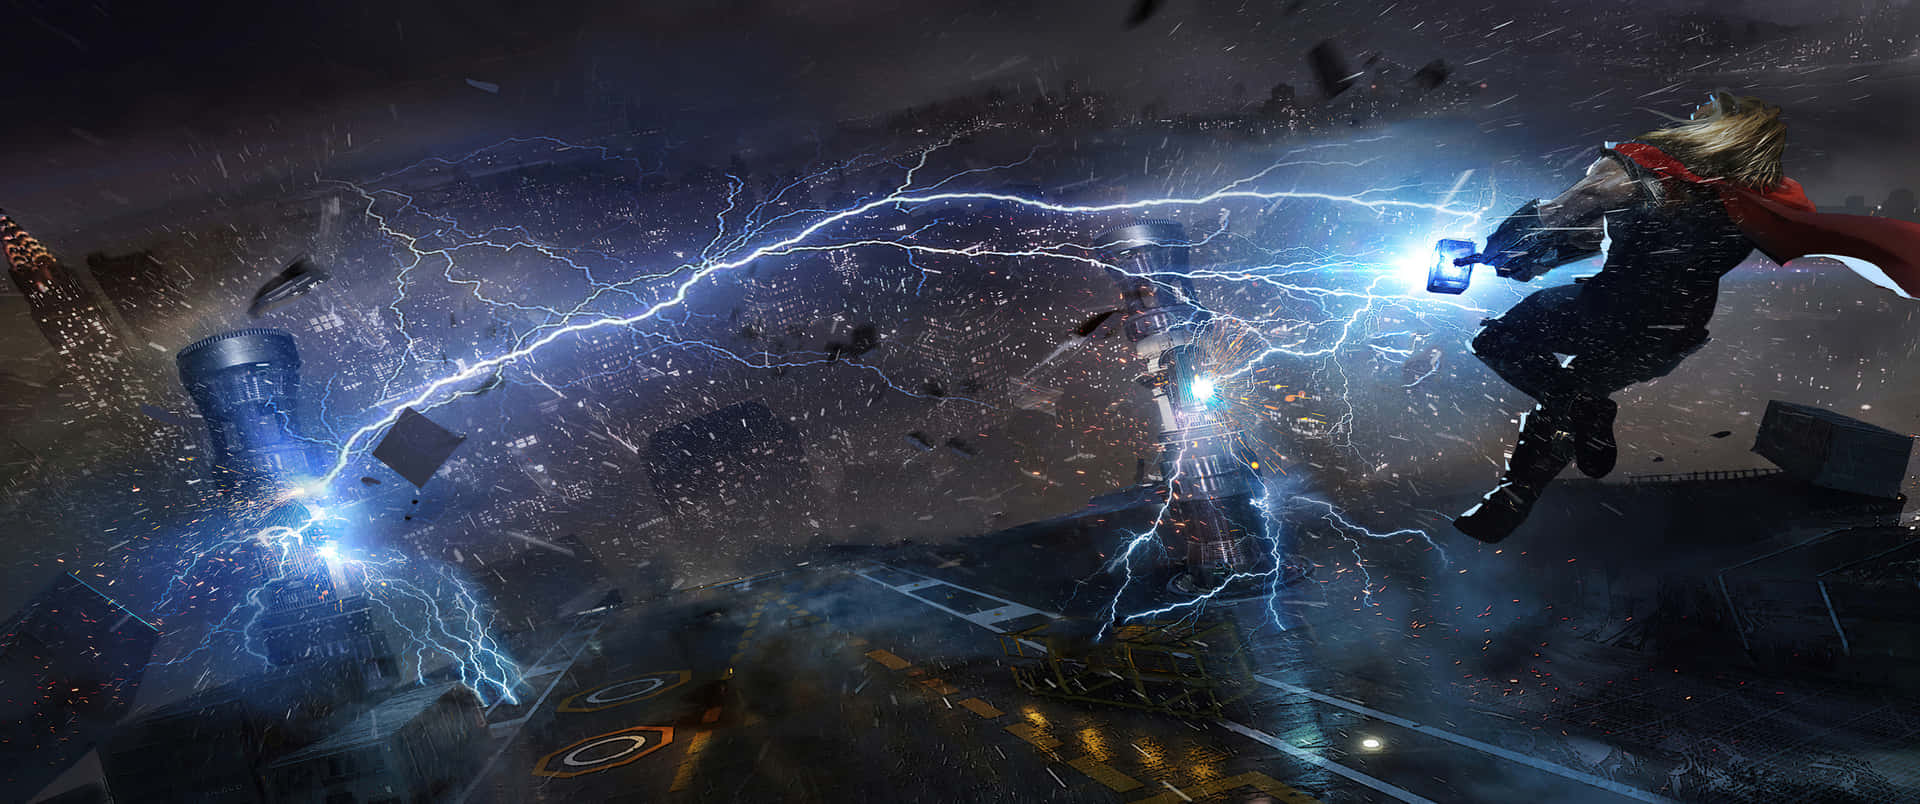 Thorhammer Lightning Marvel 3440x1440 Translates To 